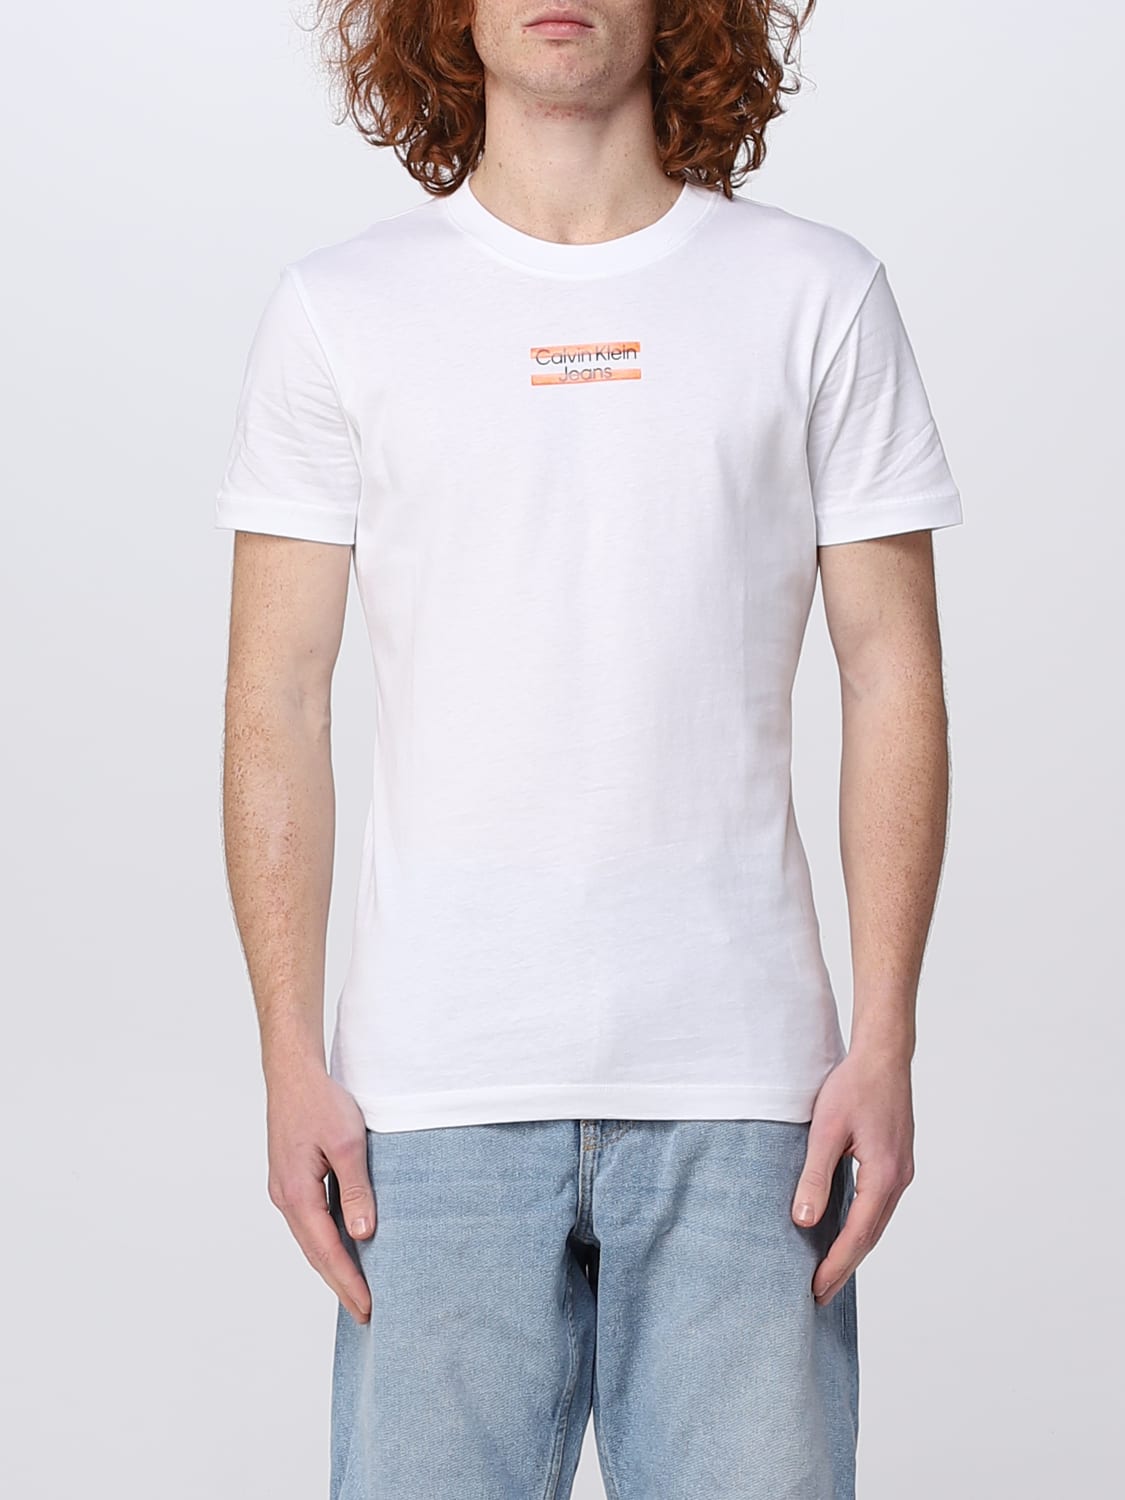 CALVIN KLEIN JEANS: T-shirt men - White